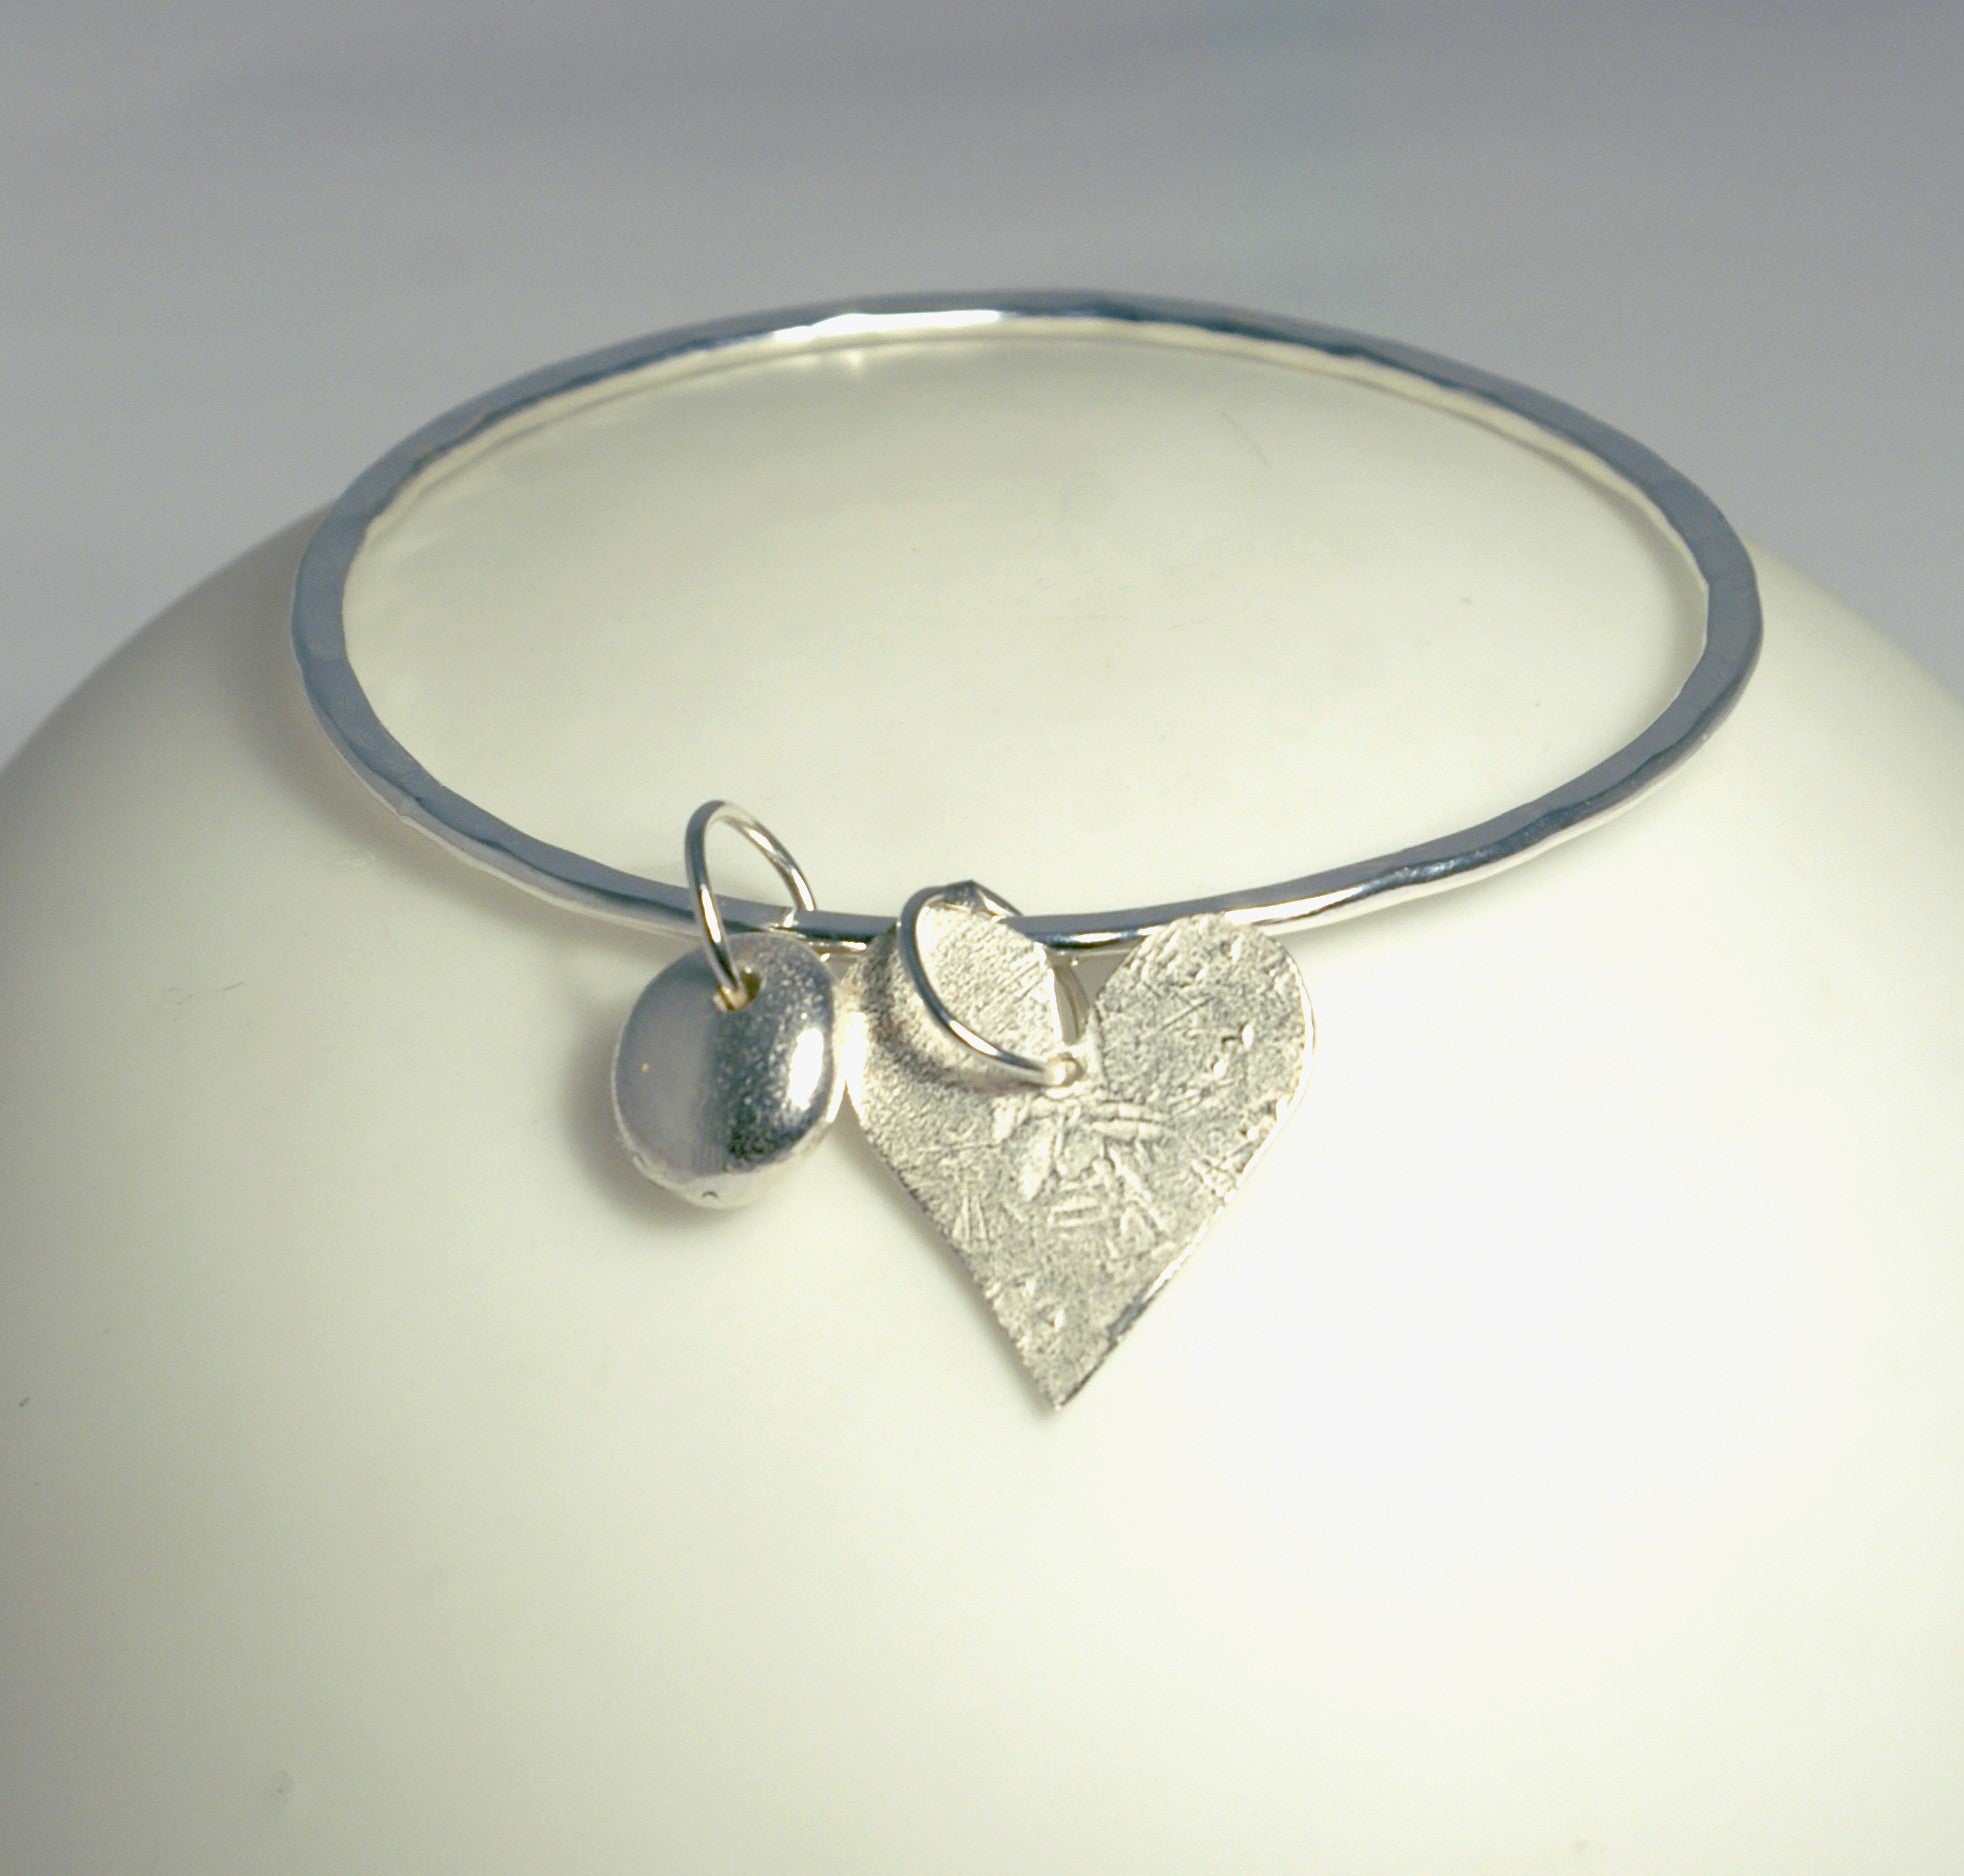 Silver Heart & Nugget Charm Bangle - The Nancy Smillie Shop - Art, Jewellery & Designer Gifts Glasgow